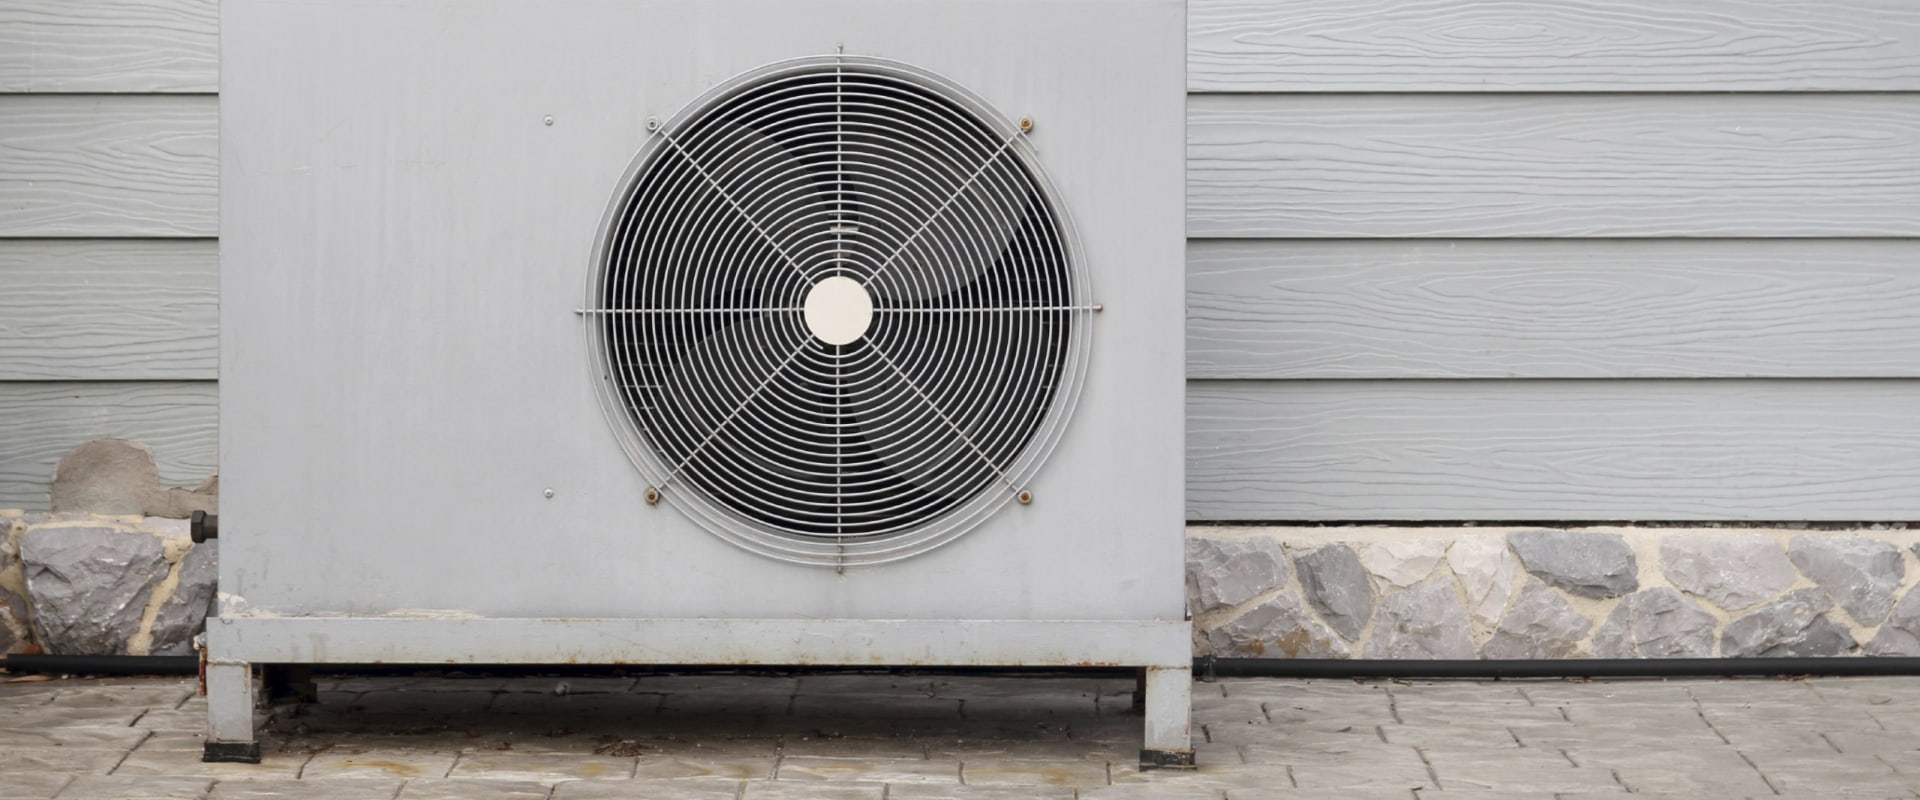 Are AC Checkups Worth It? The Benefits of Regular HVAC Maintenance